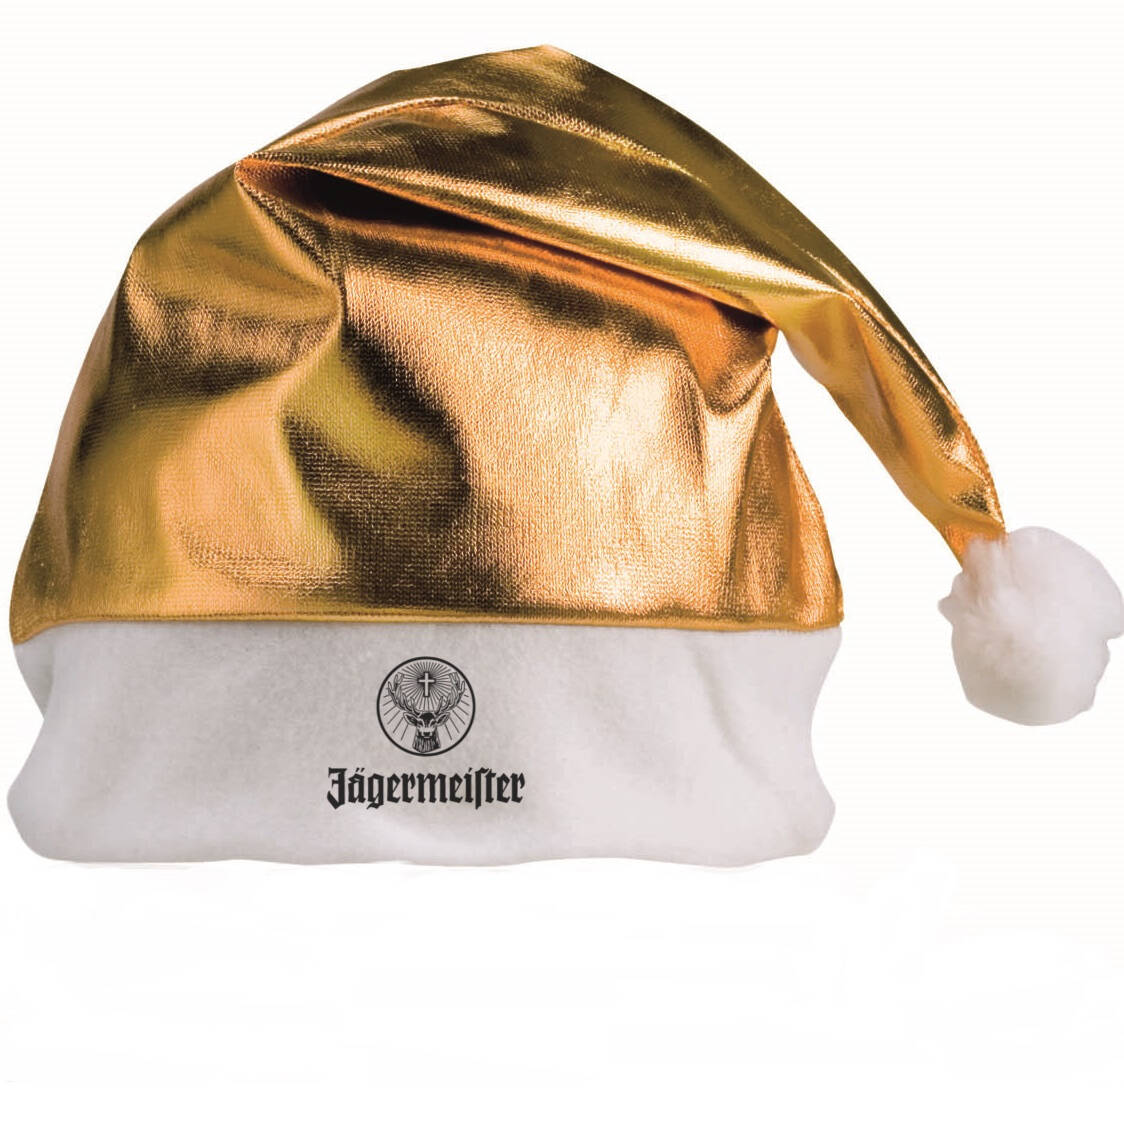 Christmas Merchandise Hat